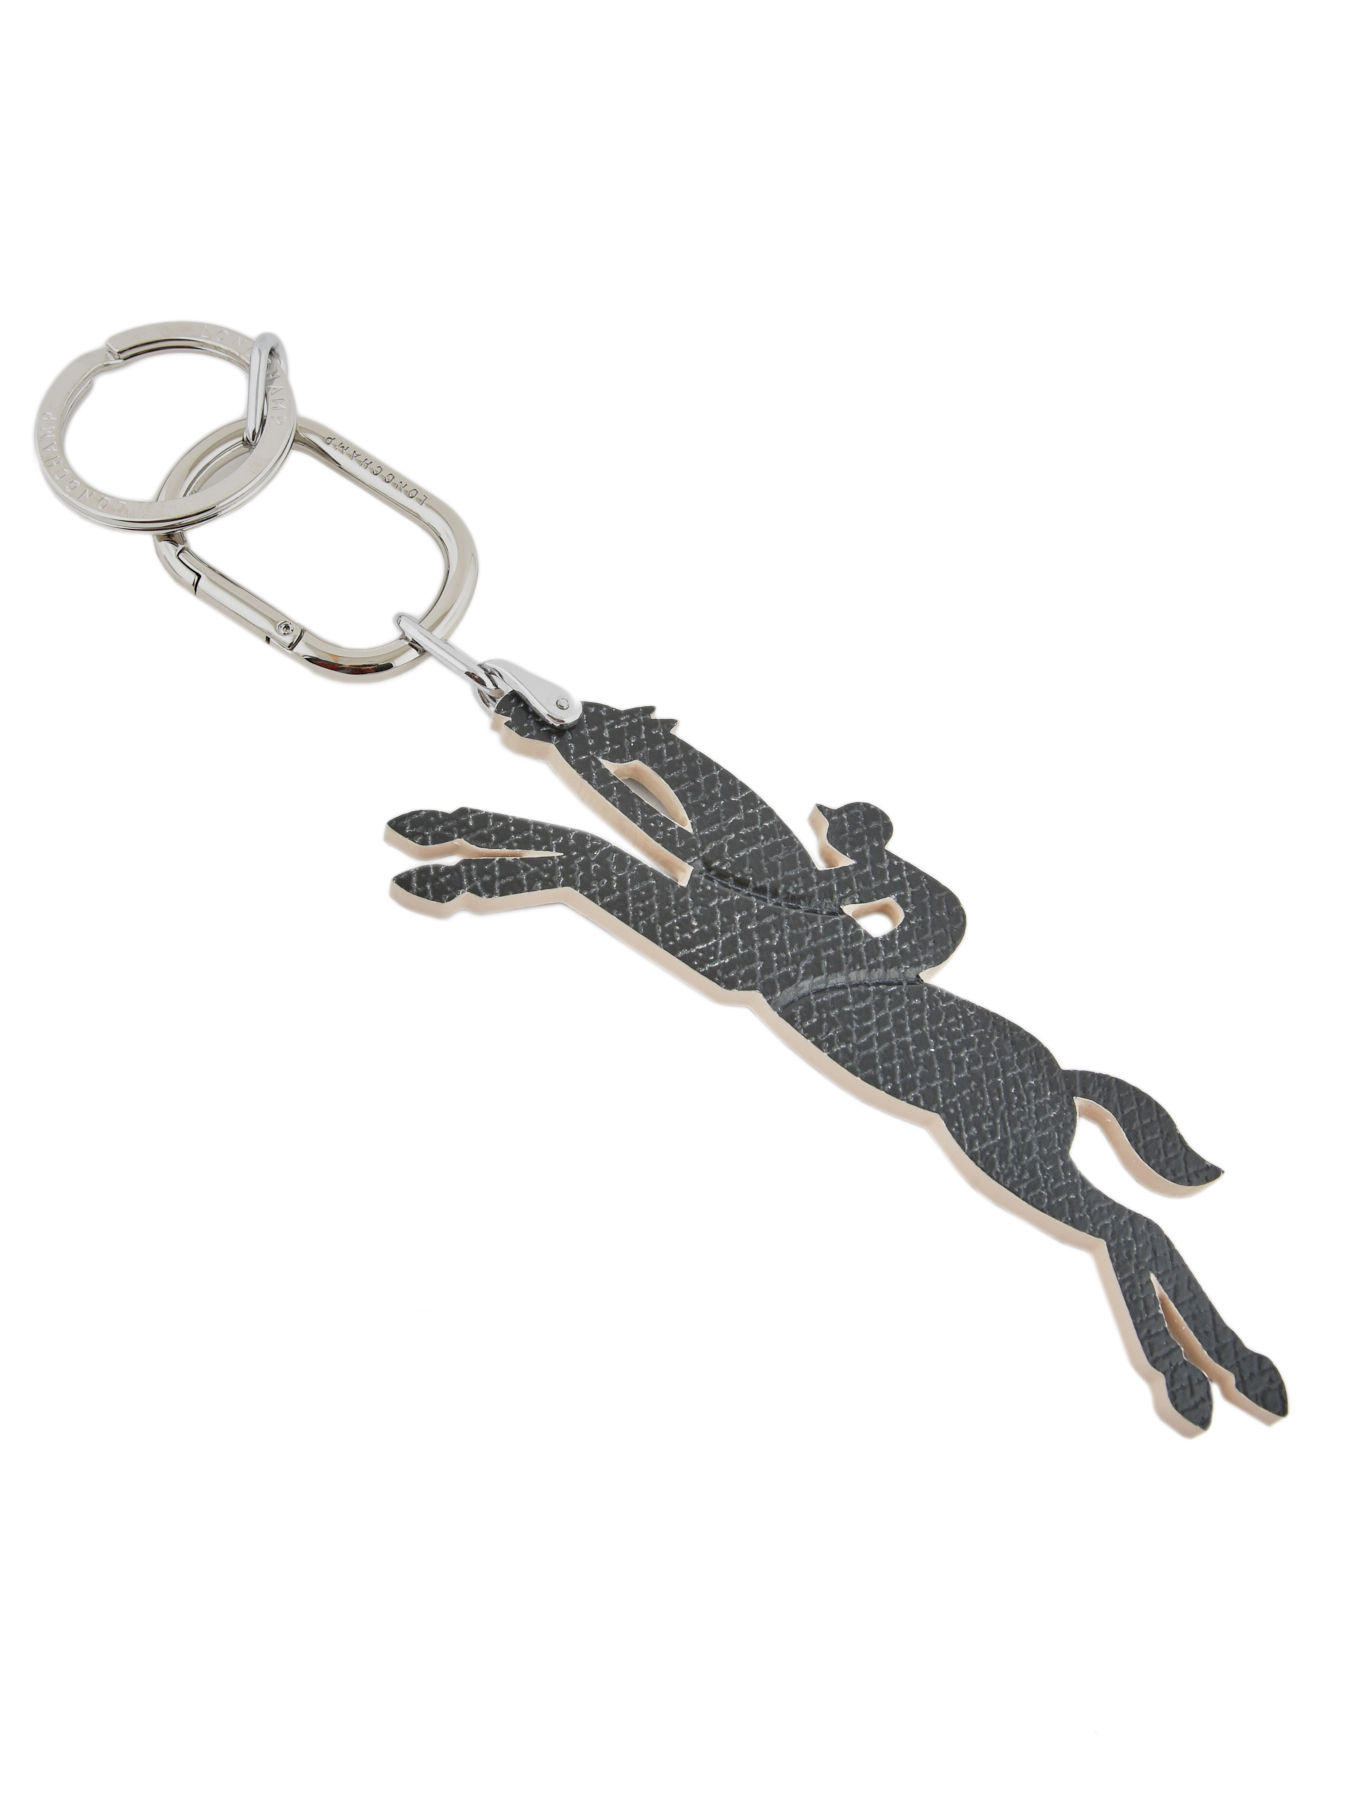 longchamp keychain